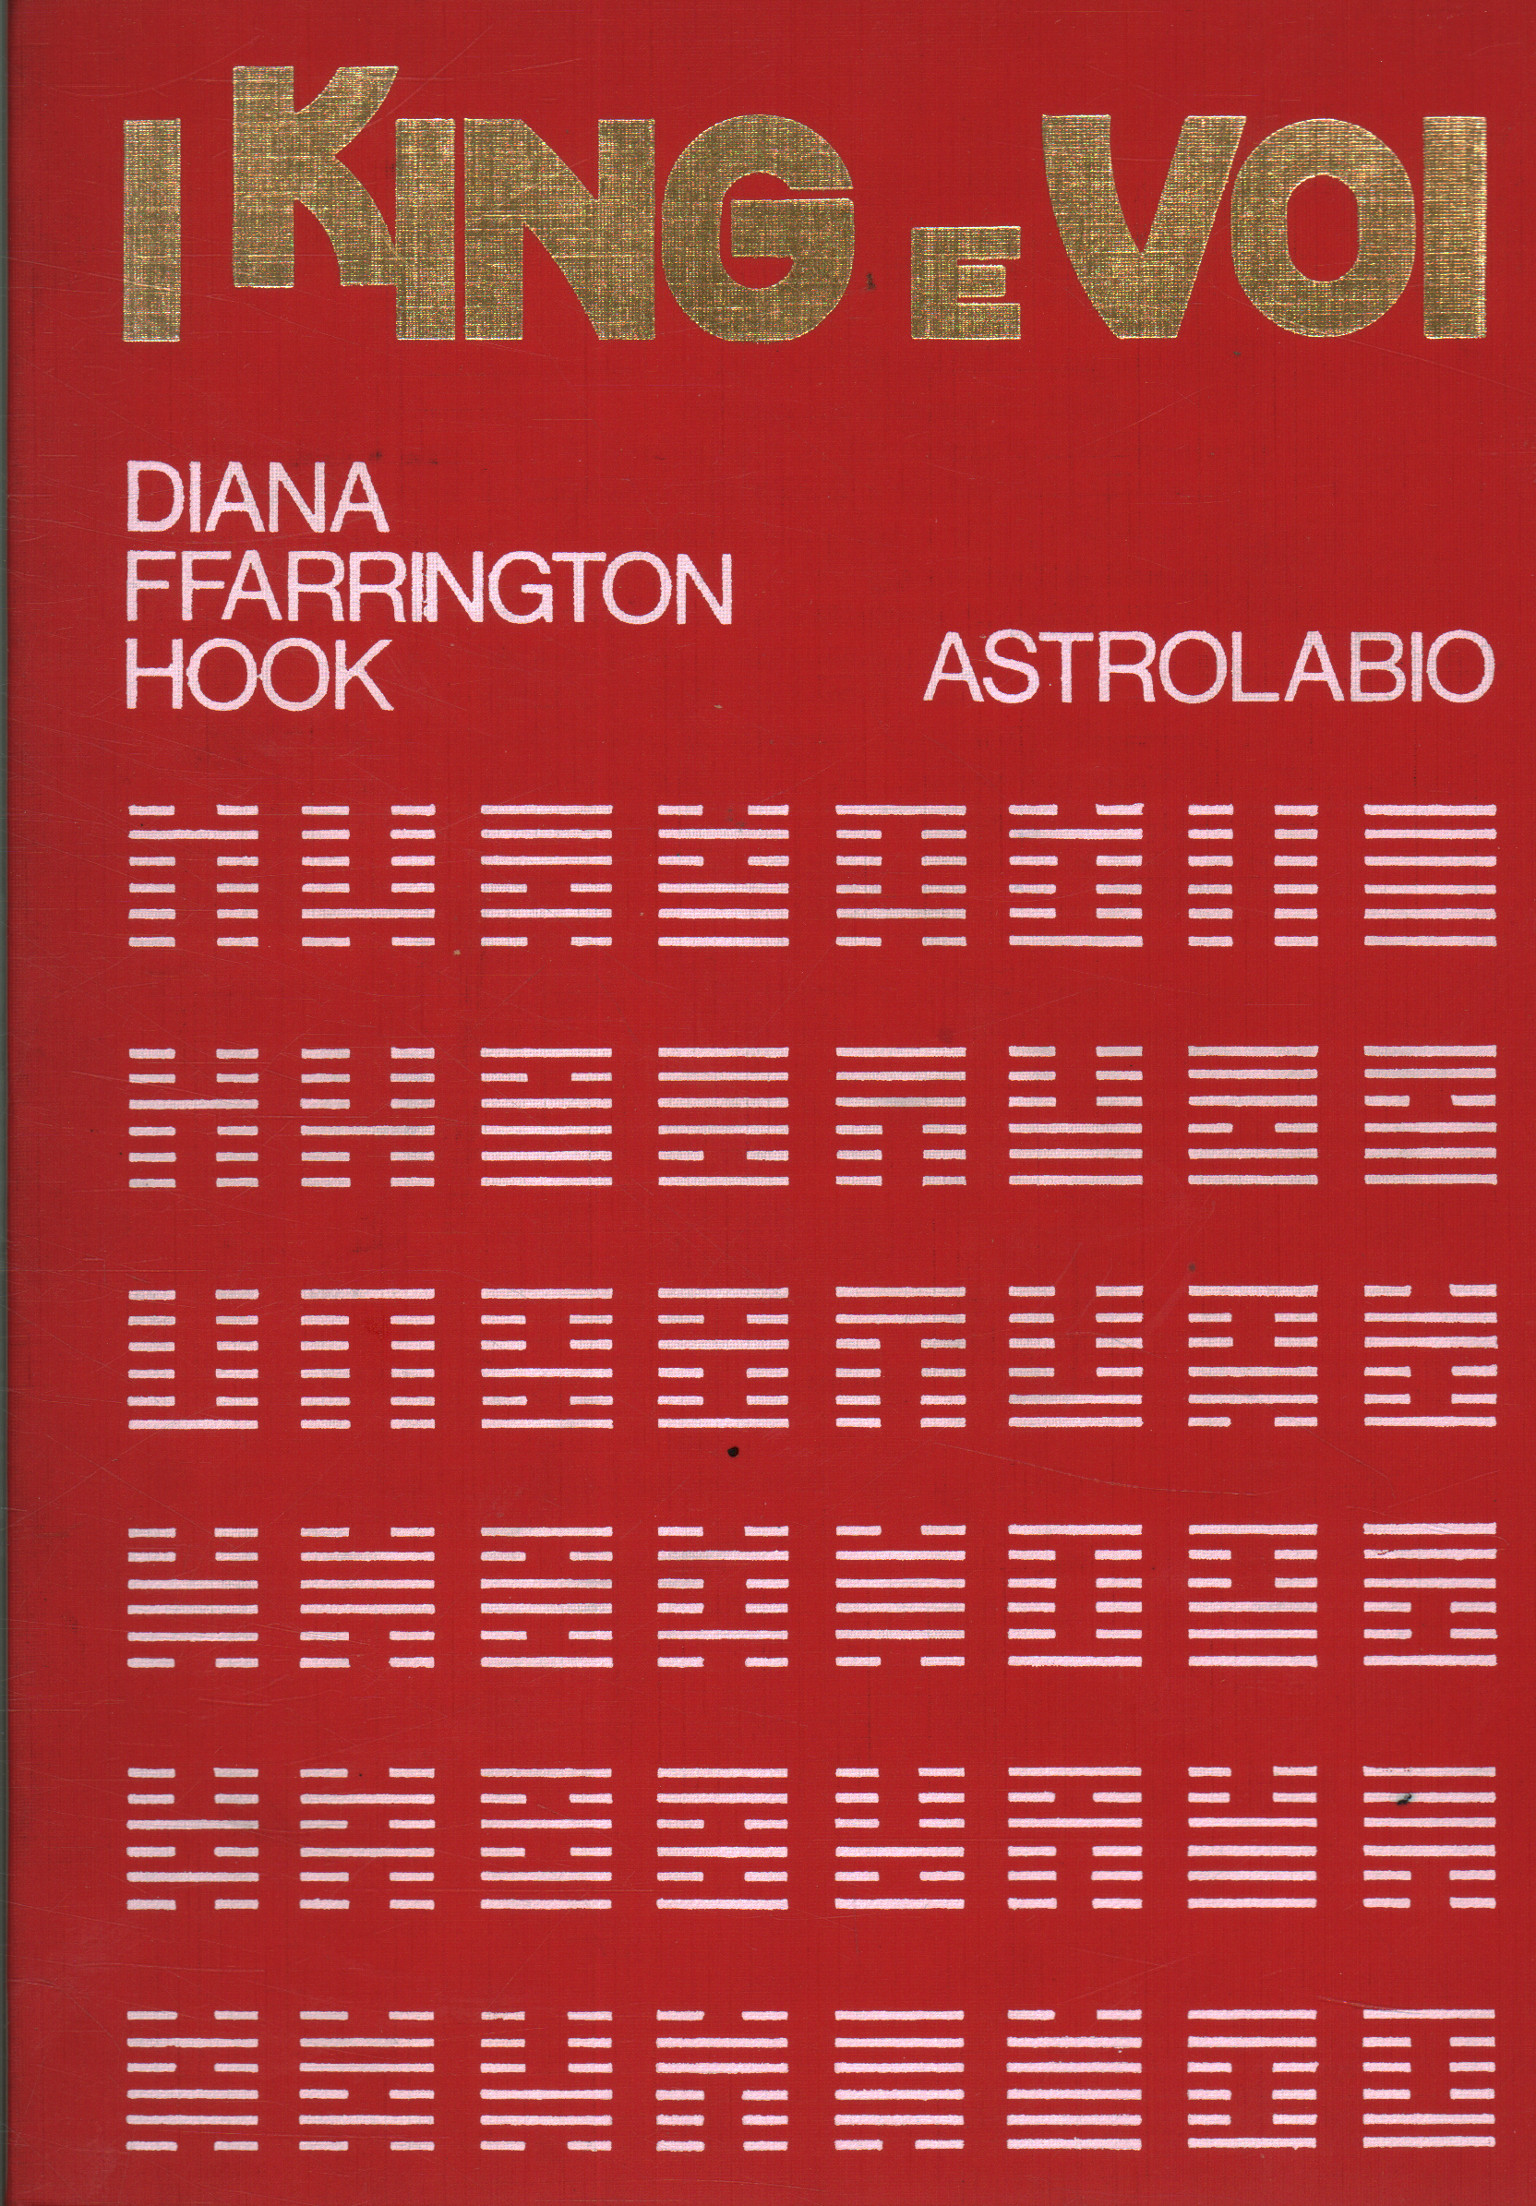 L I Ching e Voi, Diana Ffarington Hook